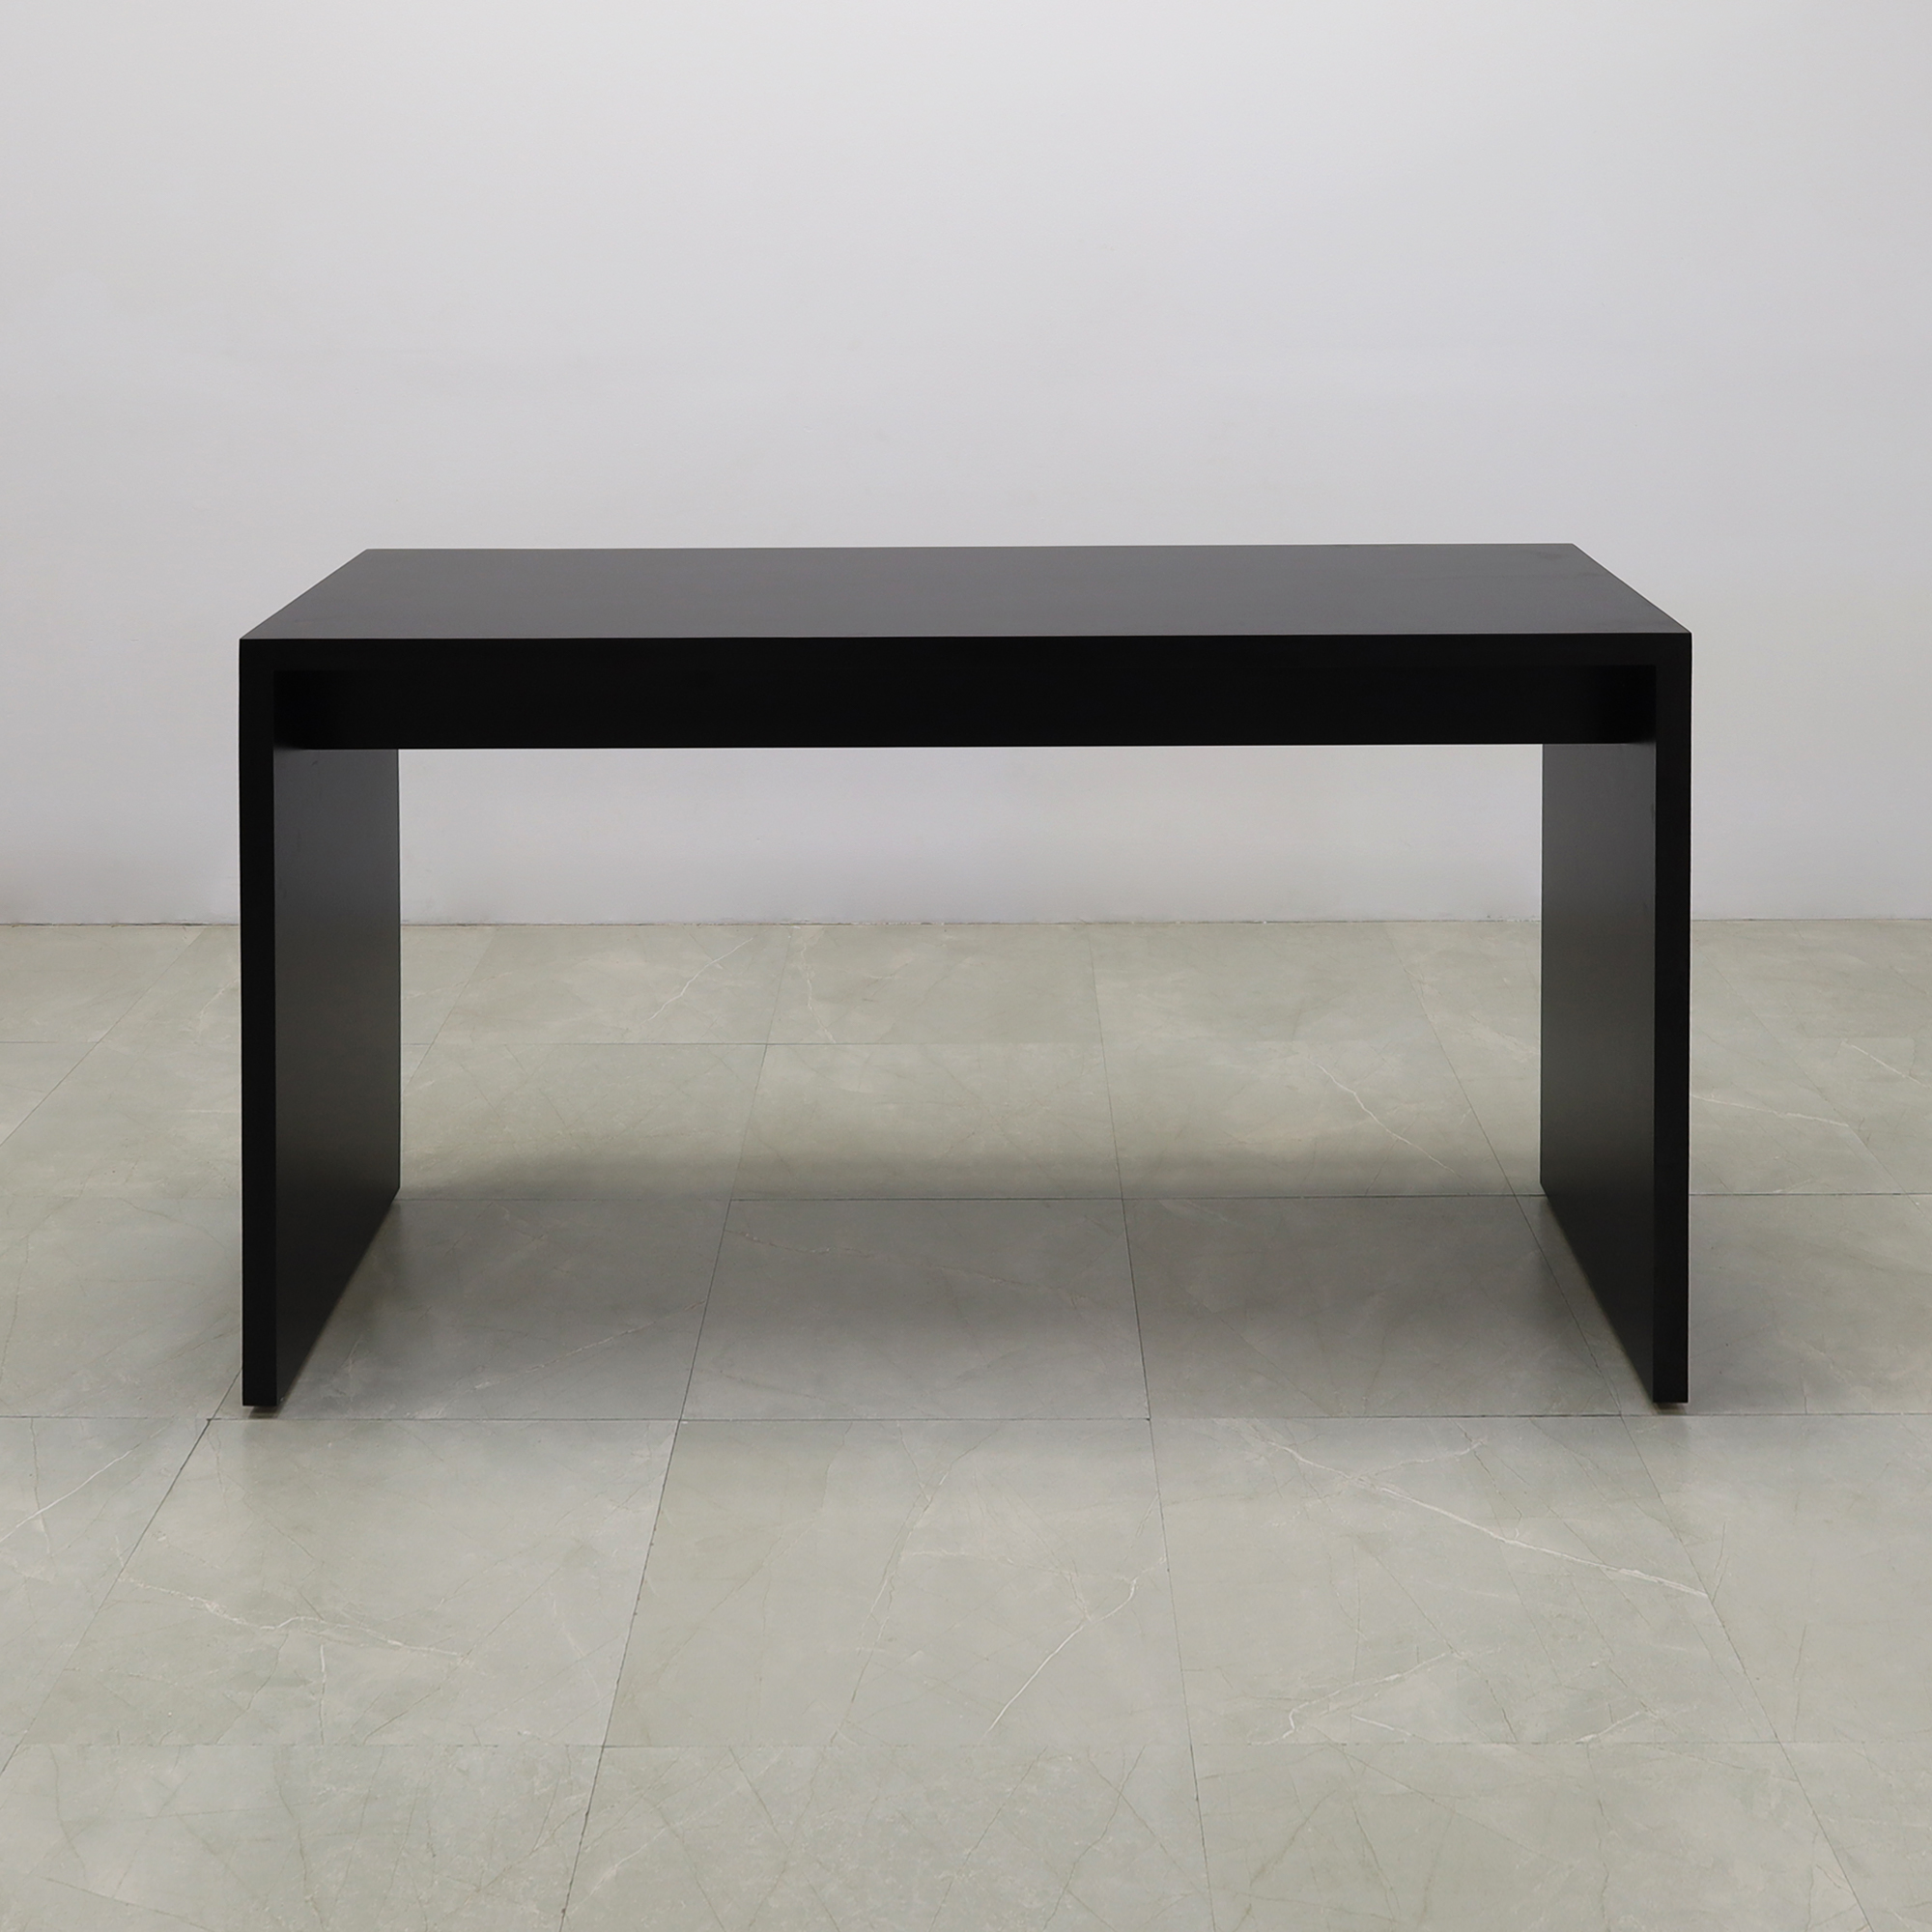 Ahville Laminate Bar Table in black traceless laminate finish shown here.